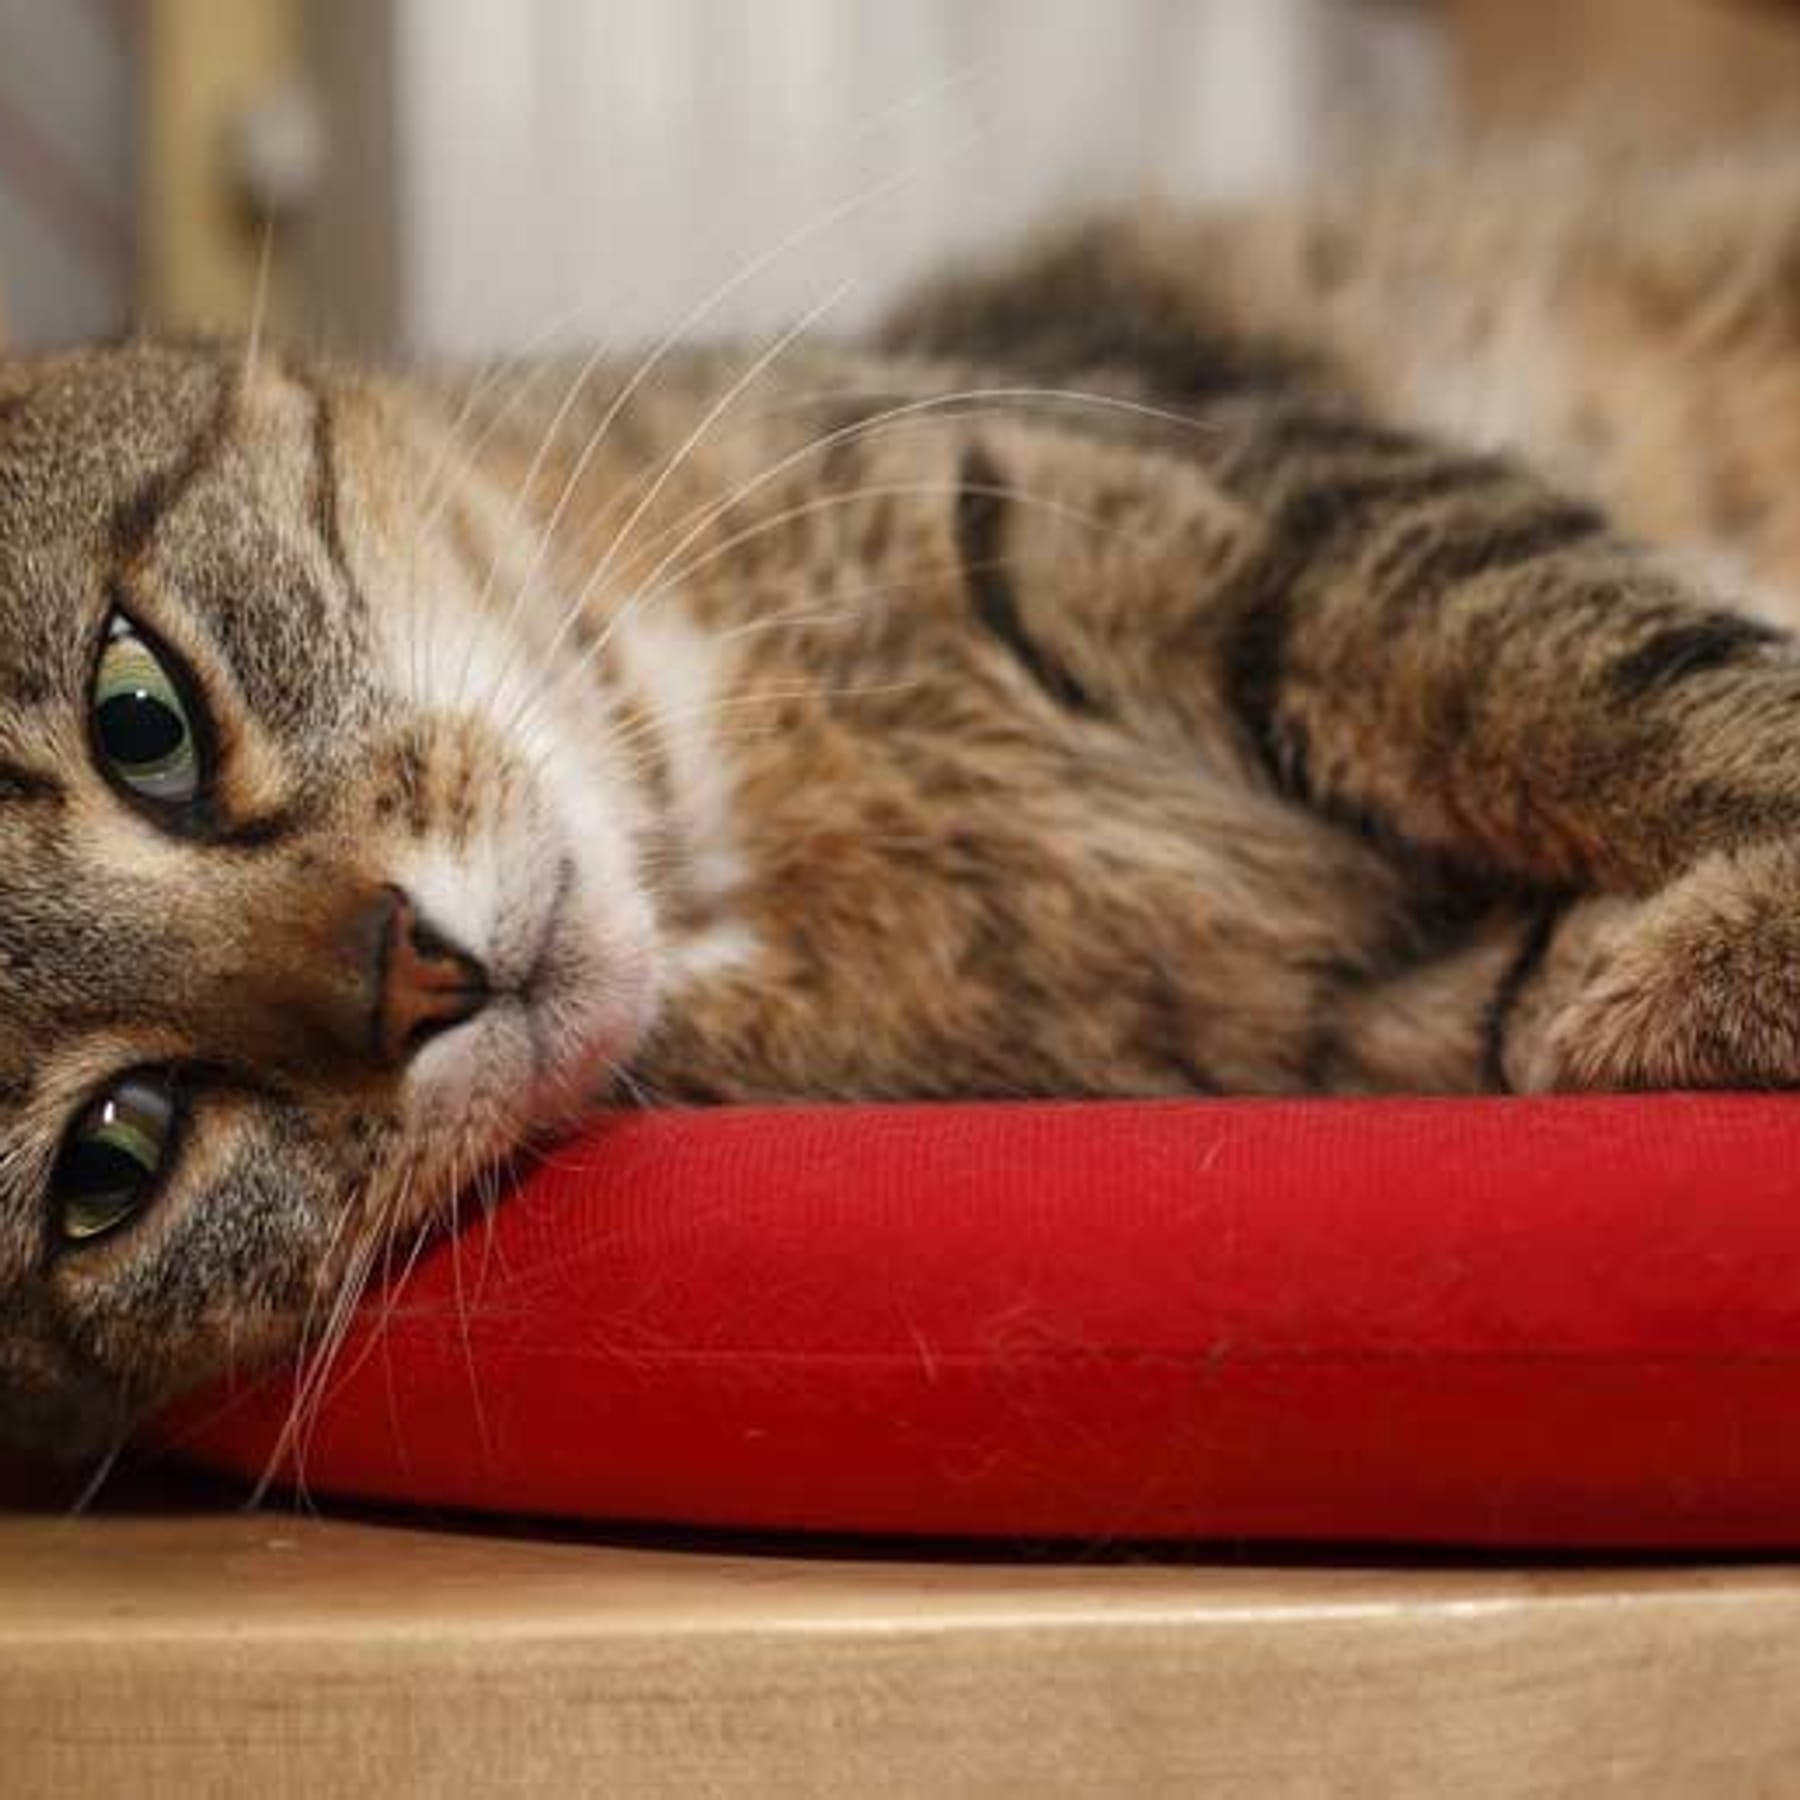 Katzen effektiv vertreiben: Das hilft gegen fremde Katzen im Garten